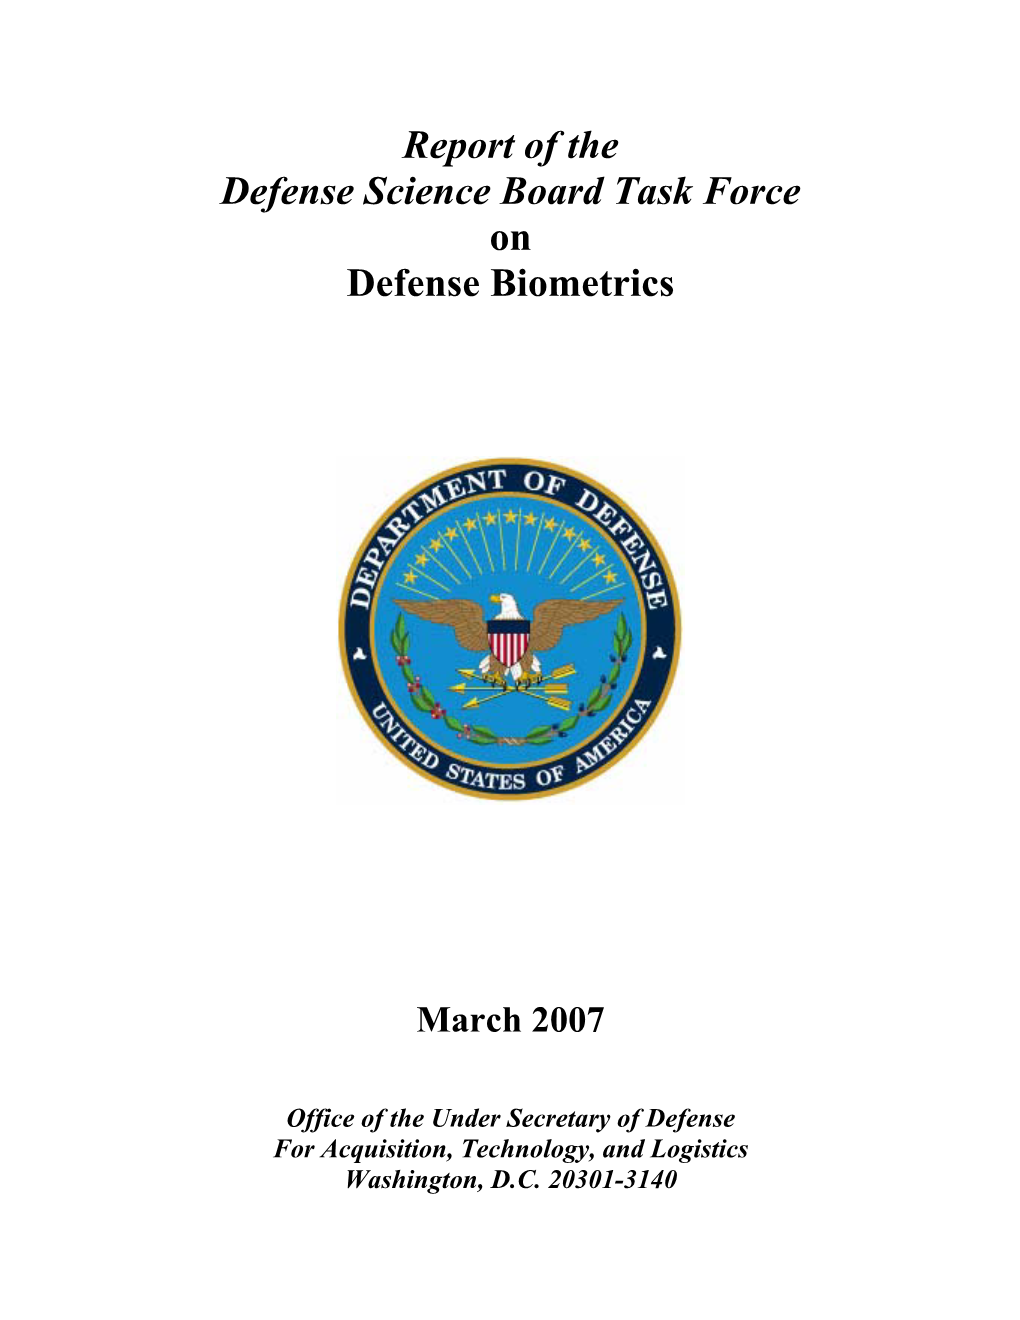 Defense Biometrics